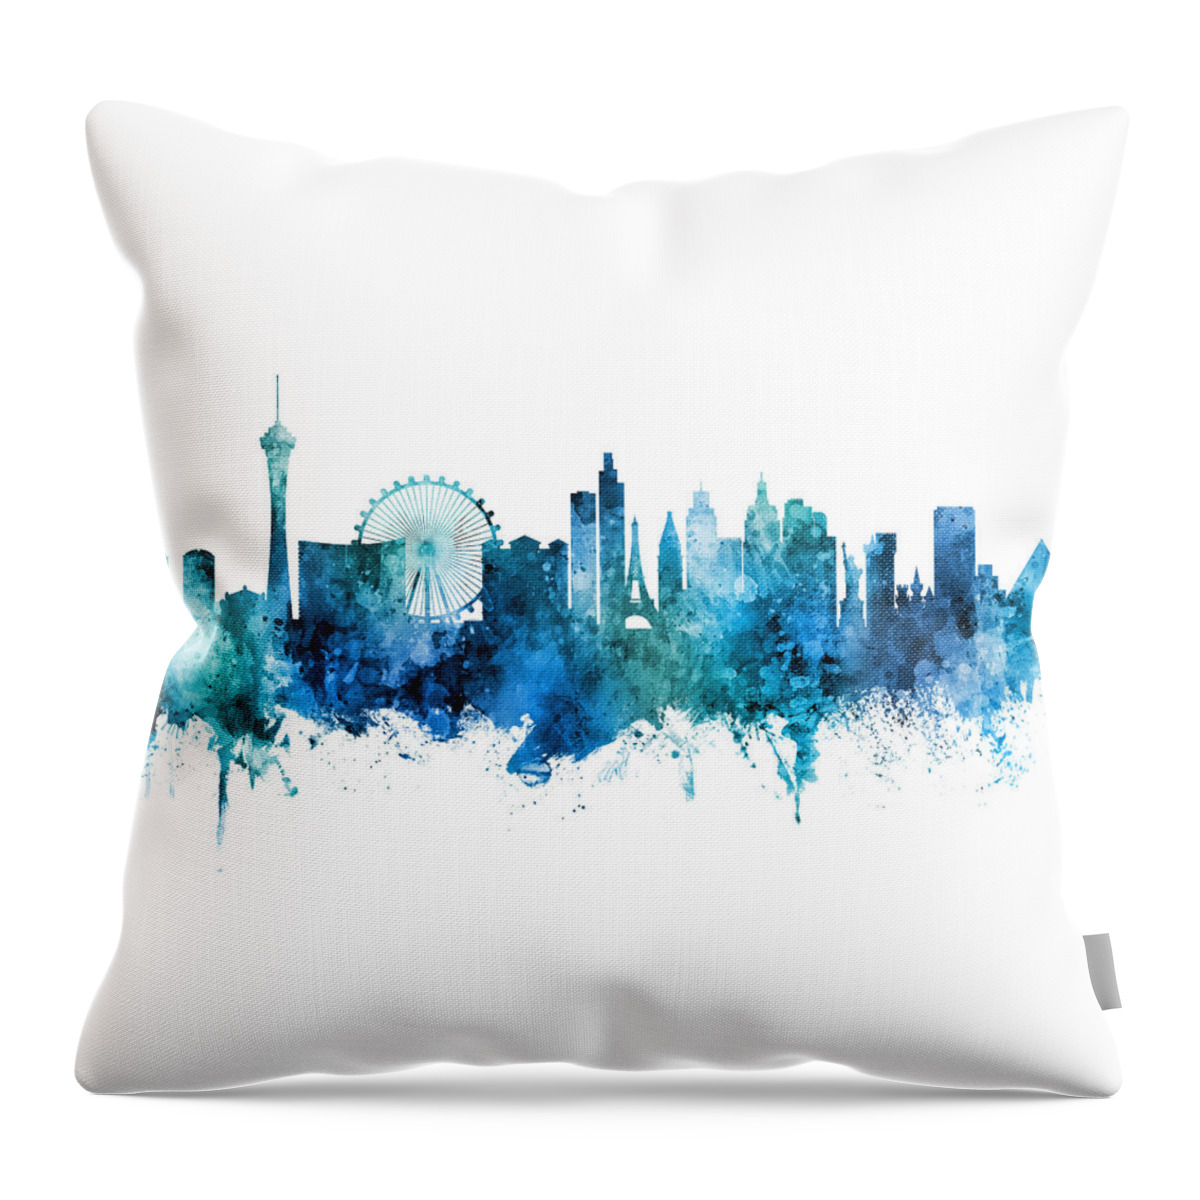 Las Vegas Throw Pillow featuring the digital art Las Vegas Nevada Skyline by Michael Tompsett